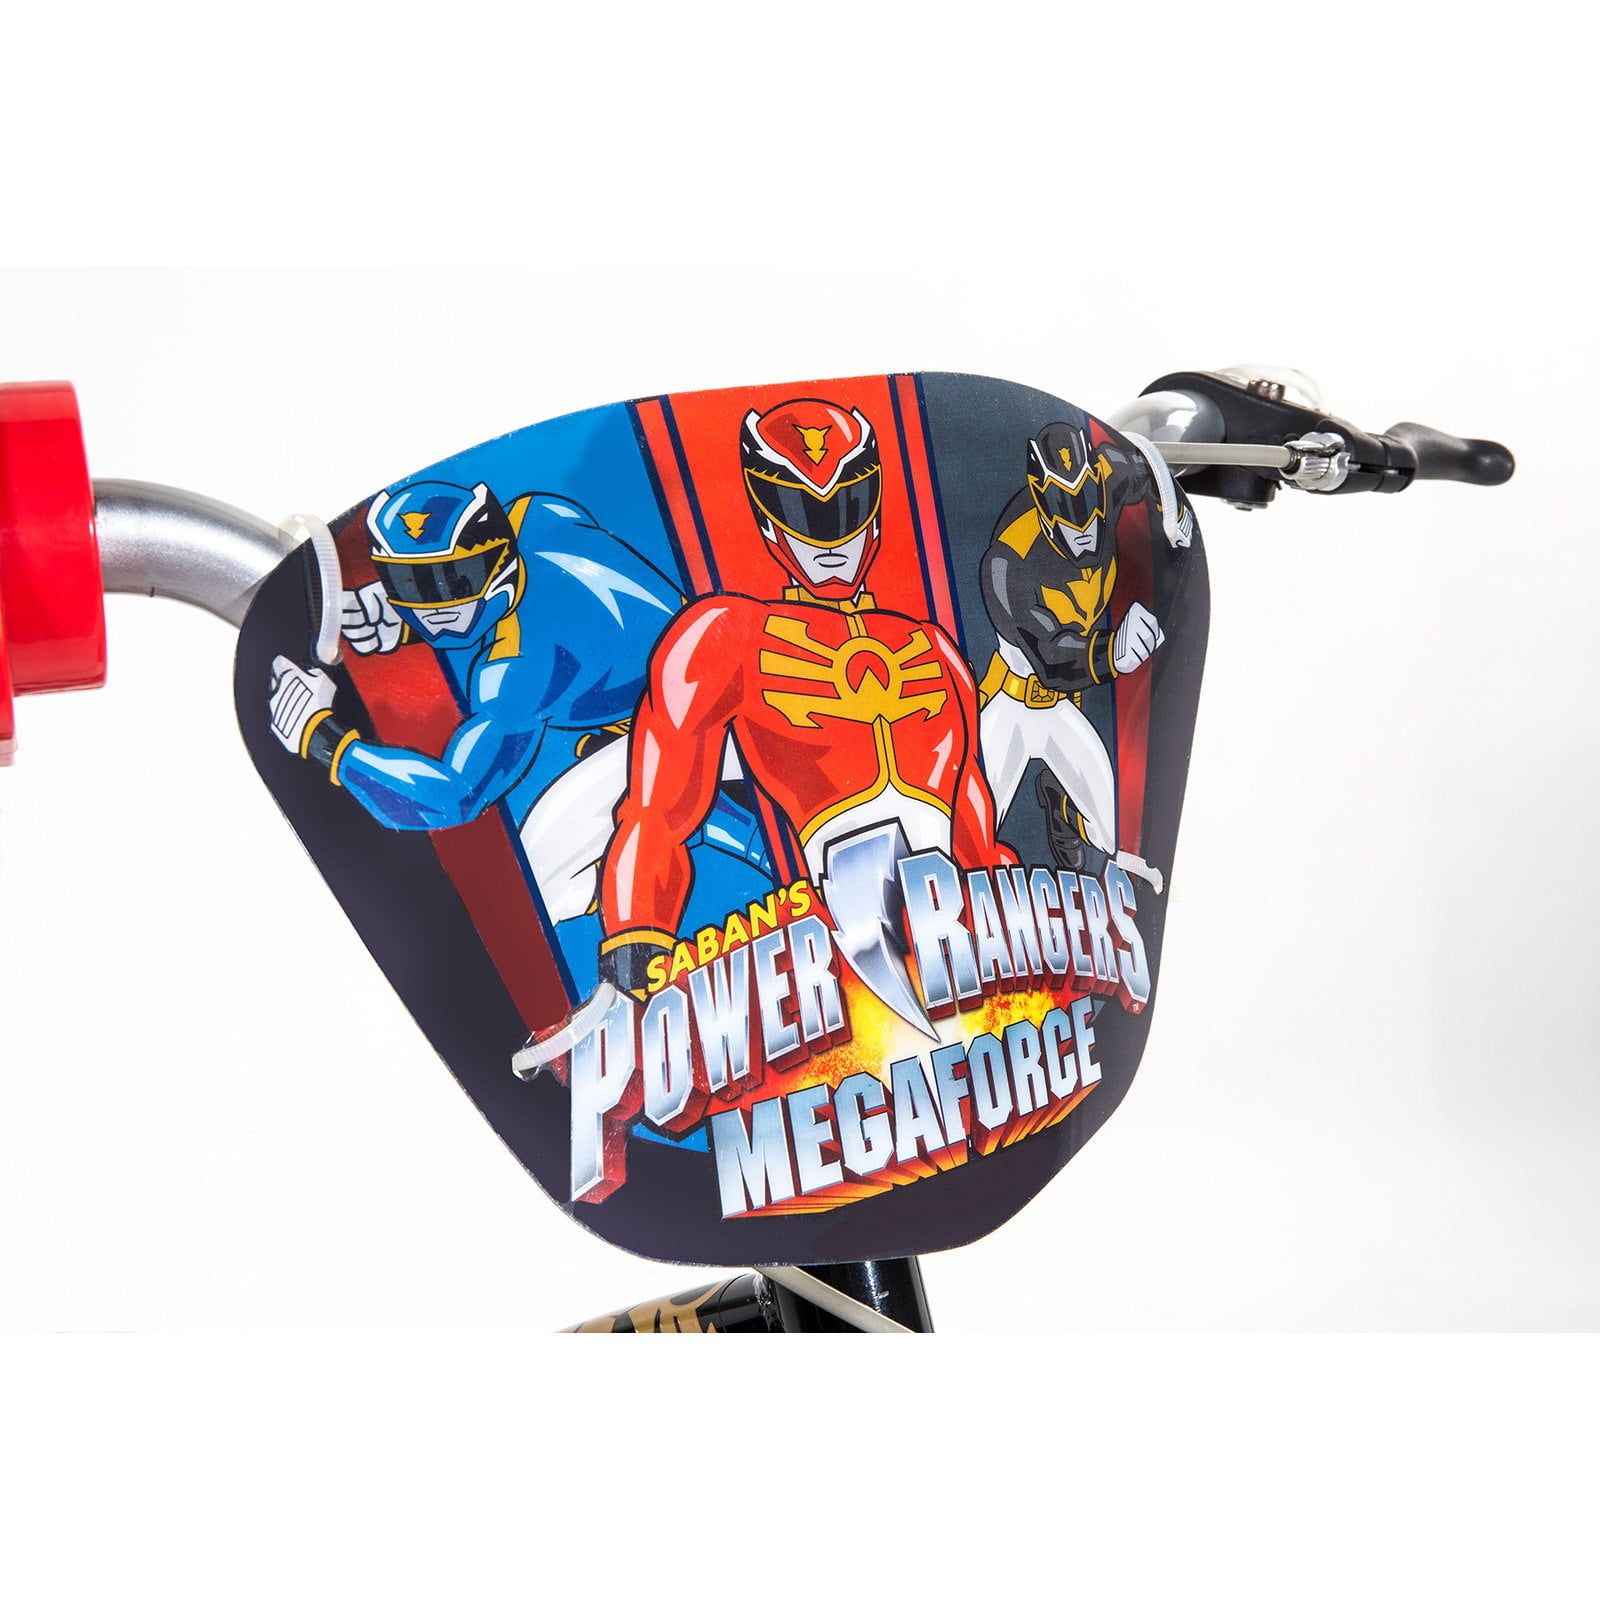 Black and Red Power Rangers Boys 16-Inch Mega Force Bike